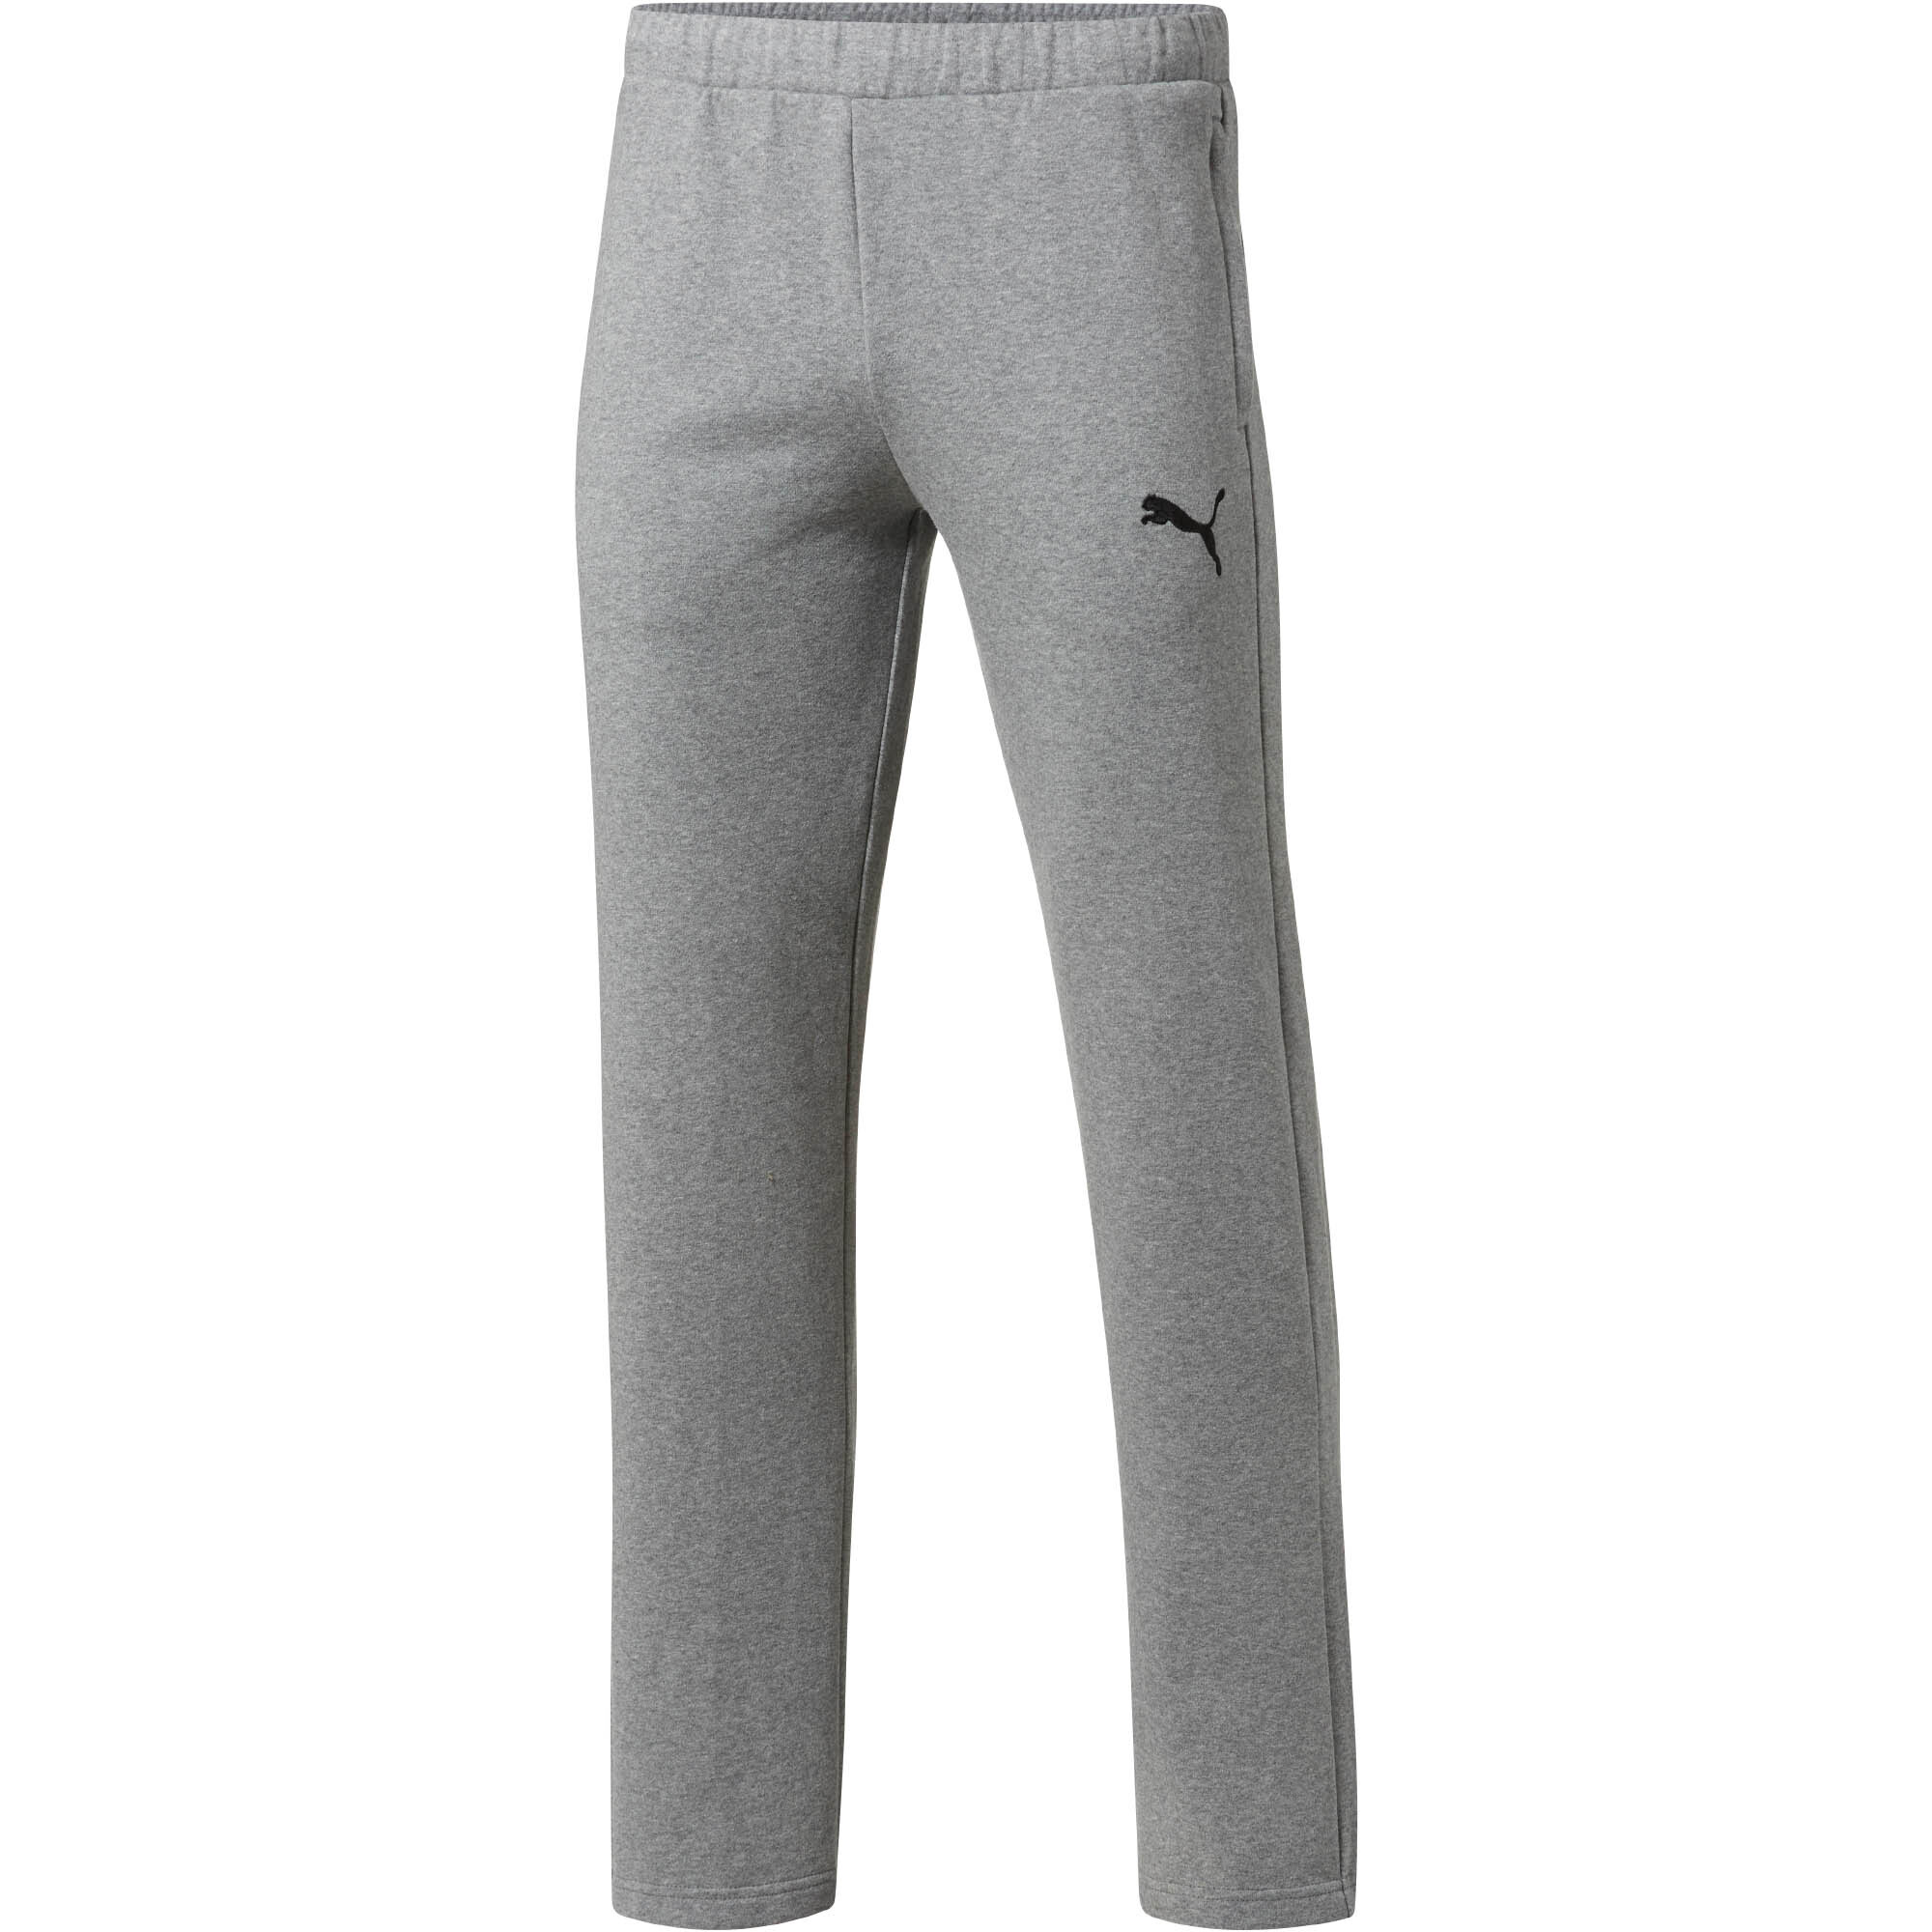 PUMA Men's P48 Modern Sports Pants | eBay